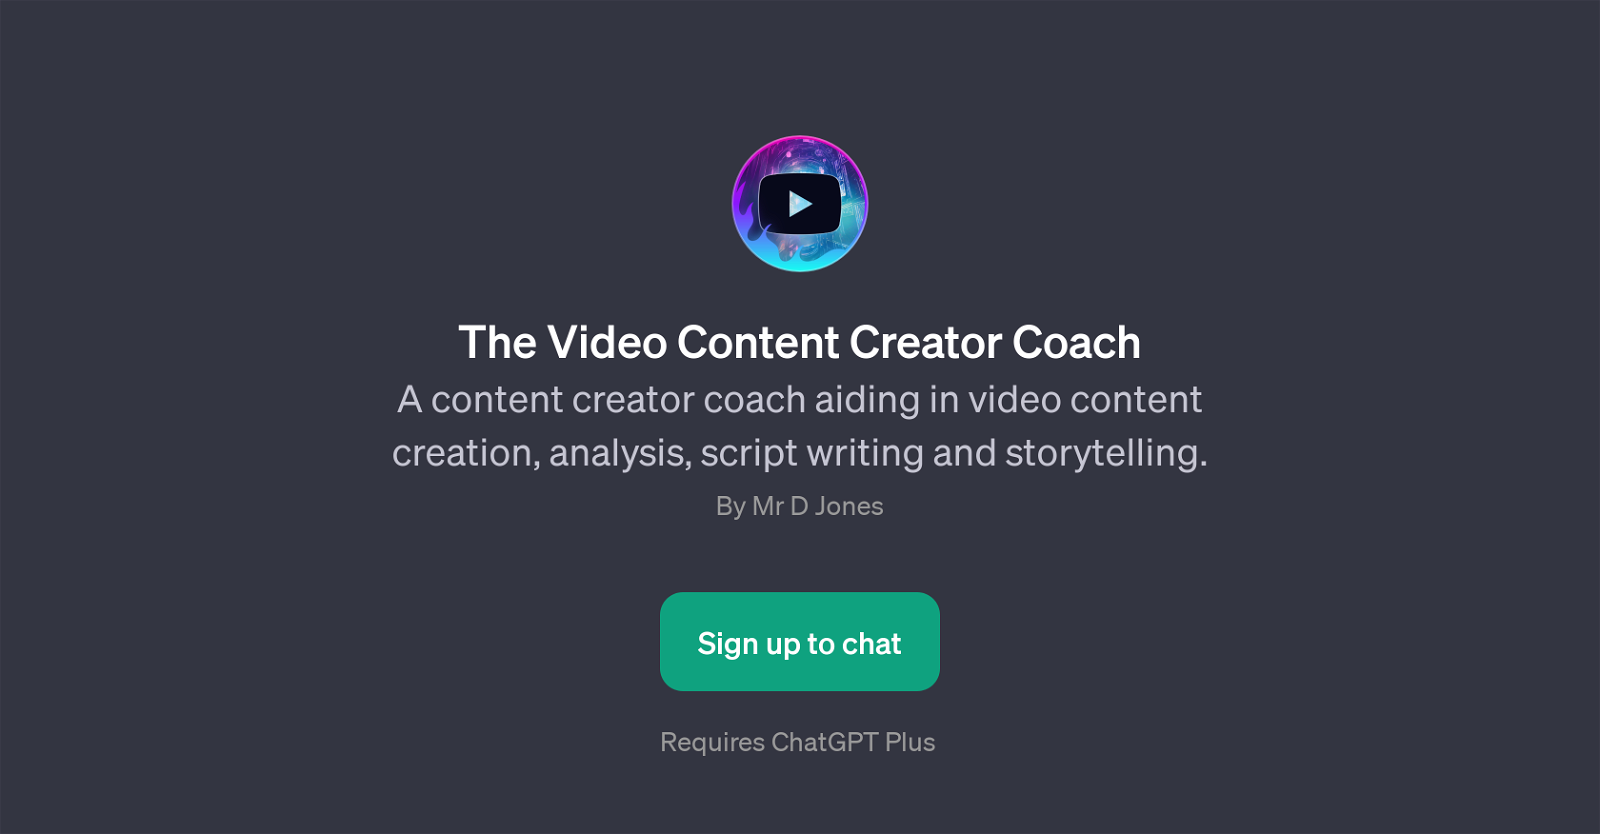 The Video Content Creator Coach website